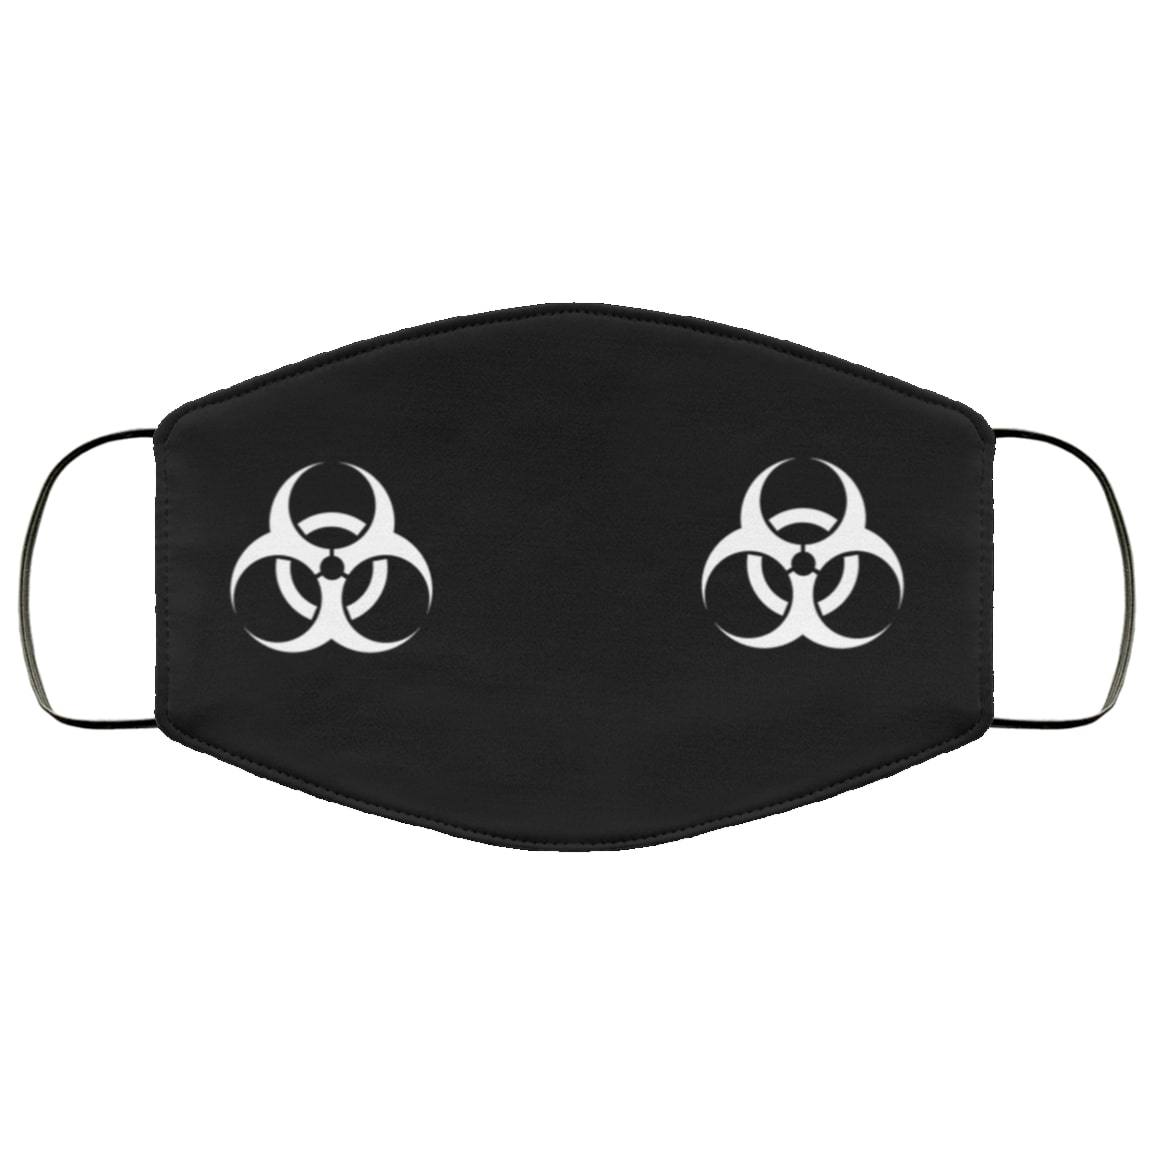 Biological hazard anti pollution face mask 2